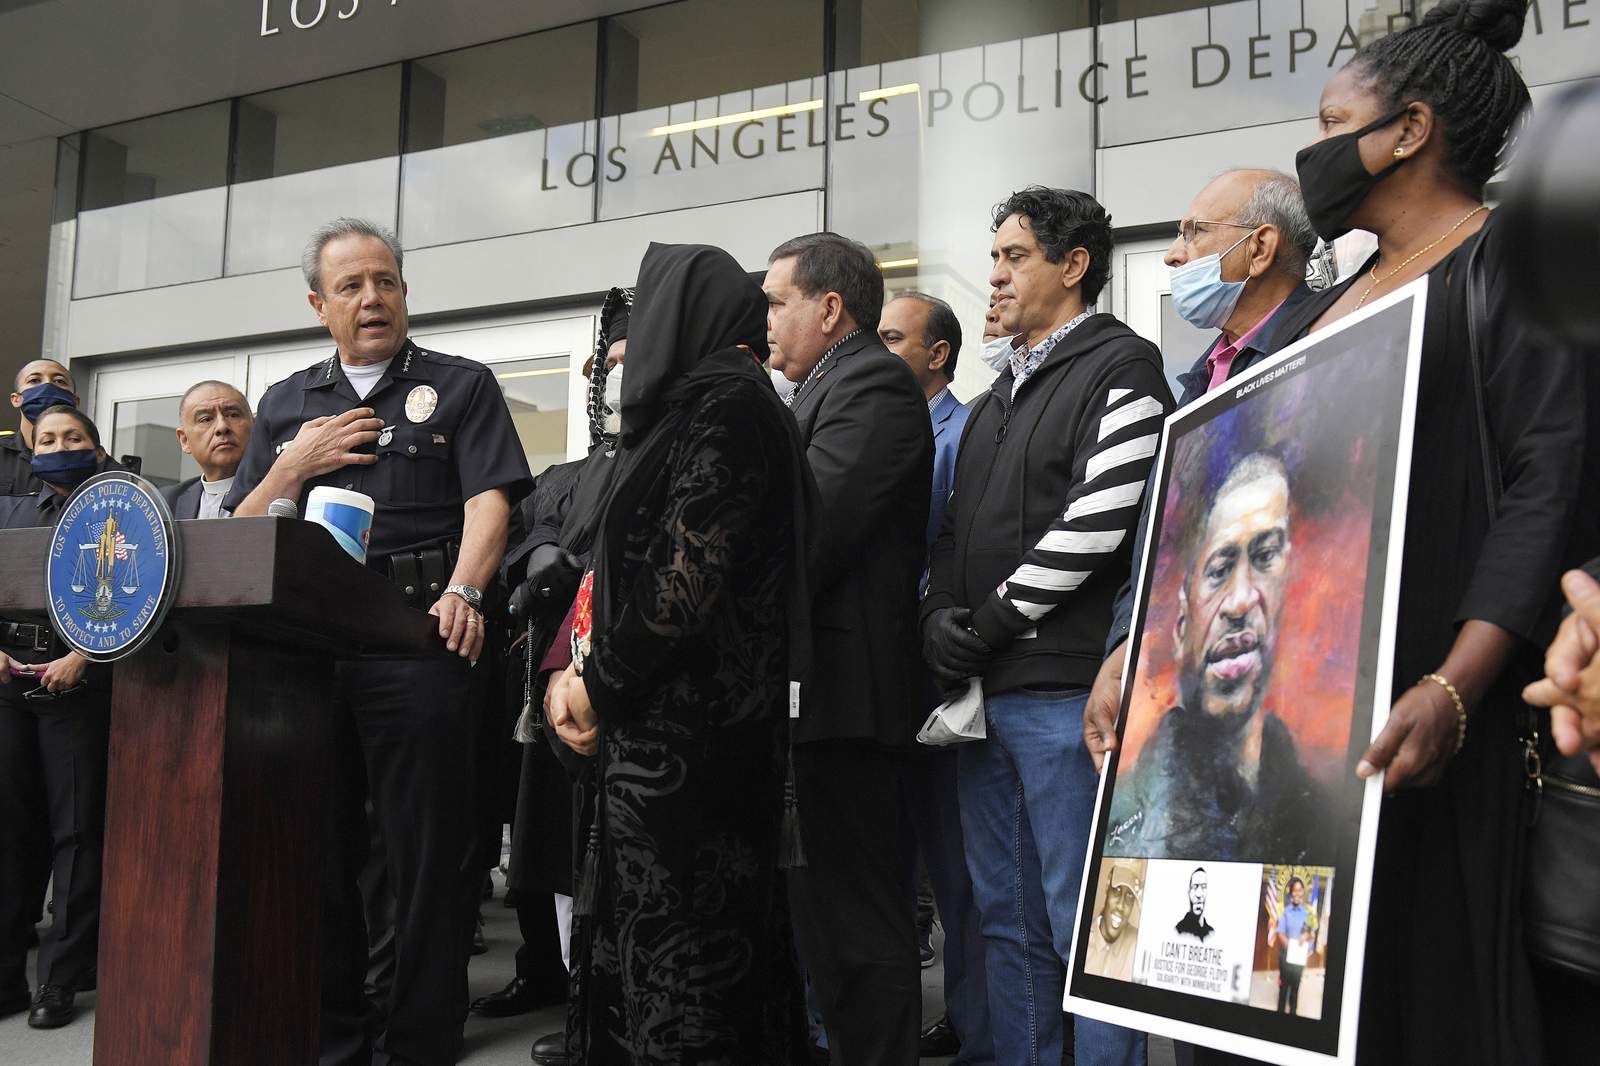 LAPD investigates report of ‘Valentine’ mocking George Floyd death